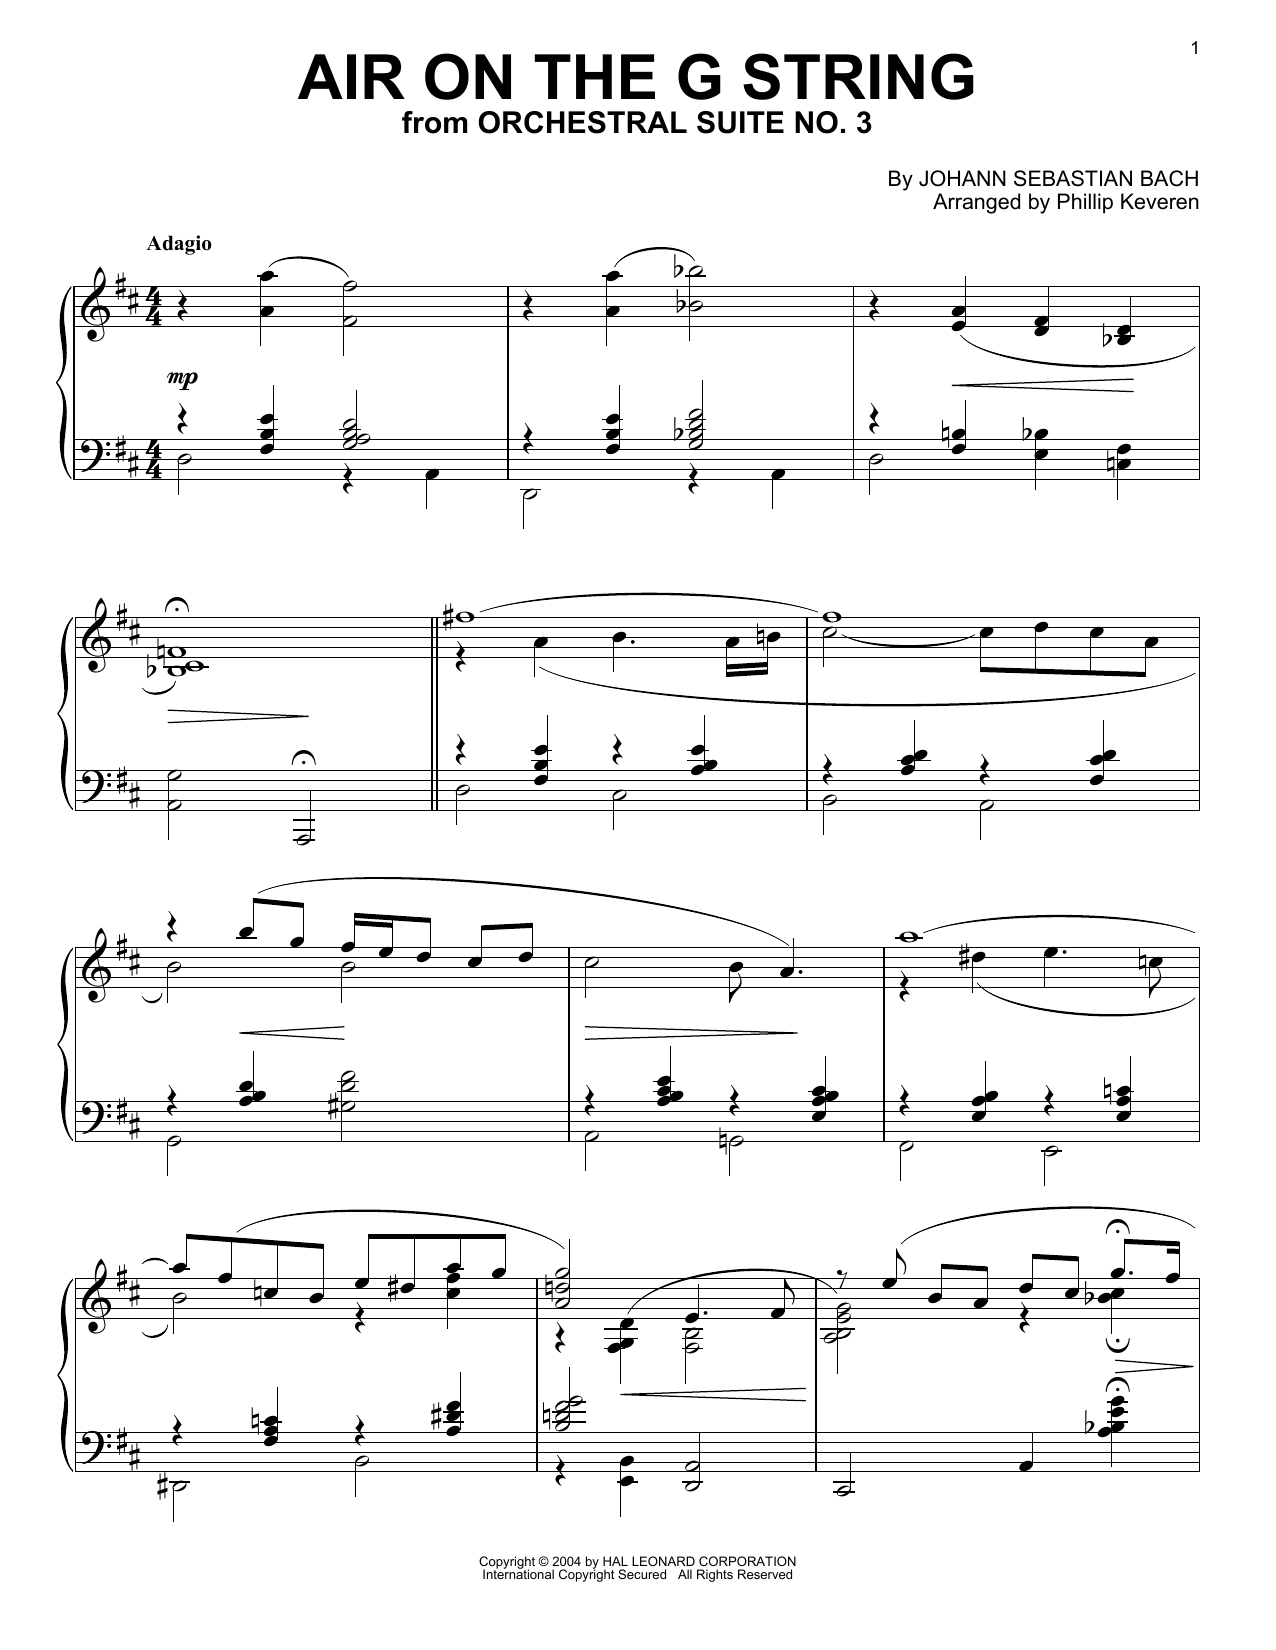 Johann Sebastian Bach Air On The G String [Jazz version] (arr. Phillip Keveren) Sheet Music Notes & Chords for Piano - Download or Print PDF